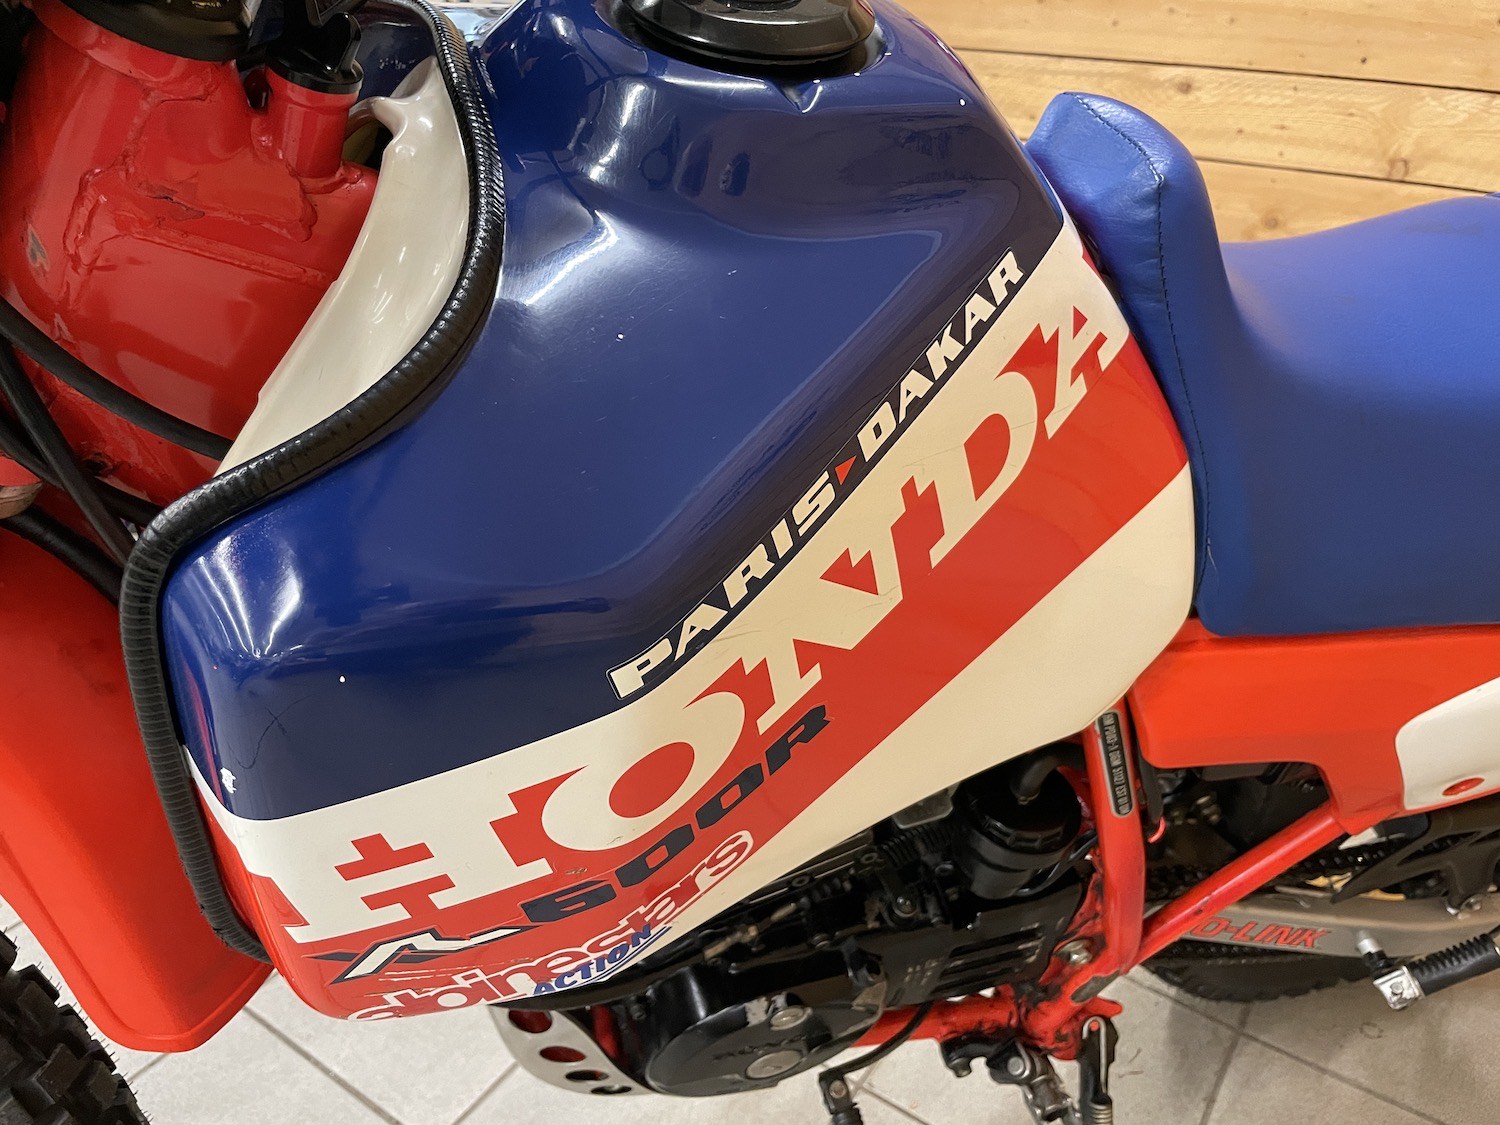 Honda_XL600R_ParisDakar_84_cezanne_classic_motorcycle_5-117.jpg